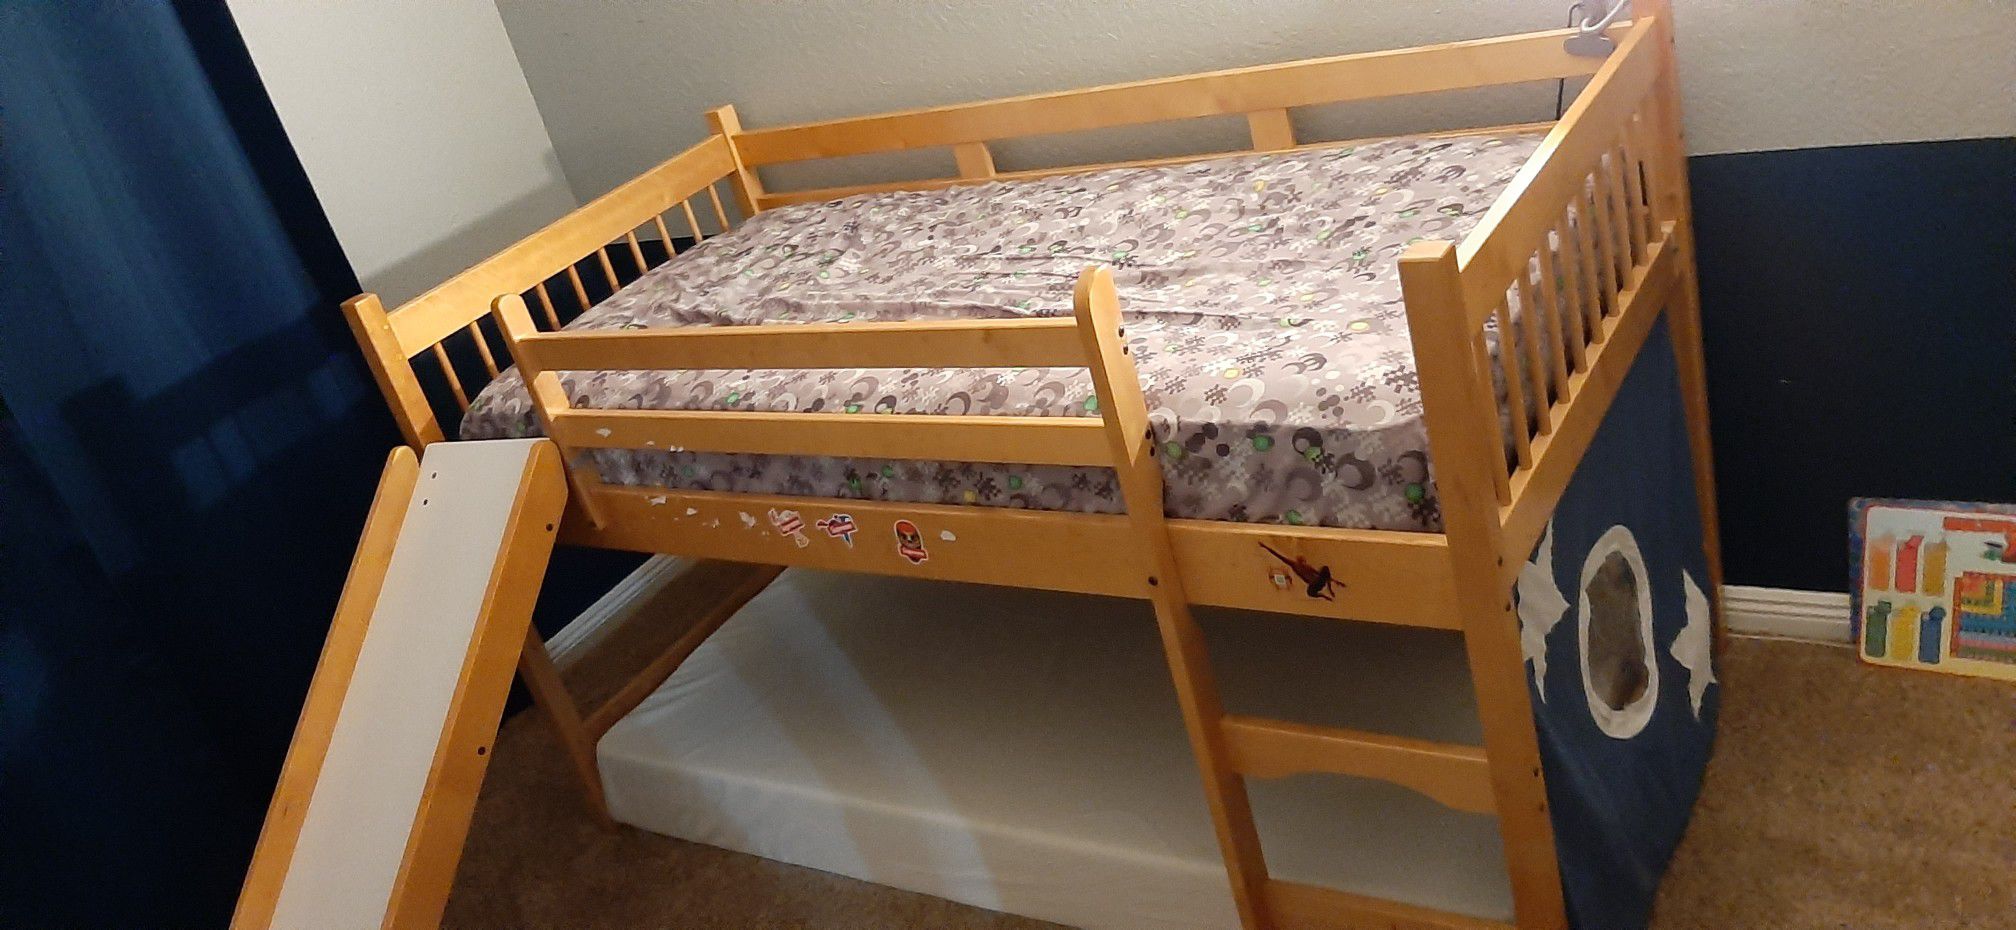 Loft twin bed frame